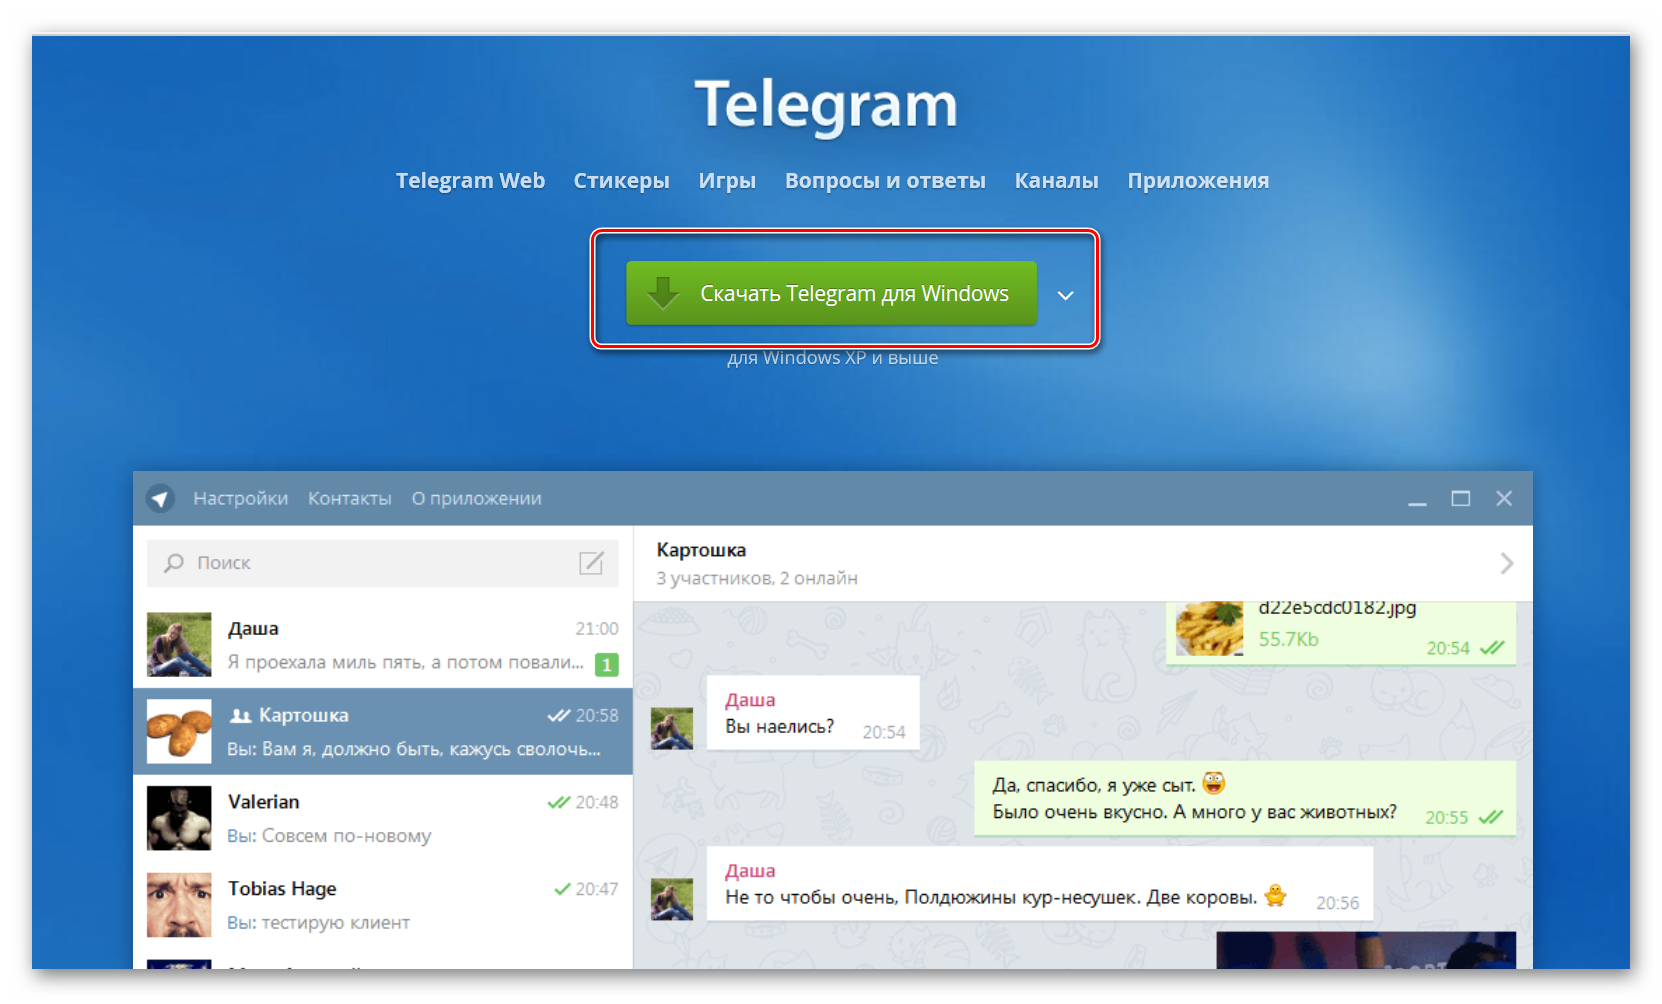 Telegram web version. Telegram profil. Профиль в телеграмме. Телеграмм web. Веб приложение в телеграм.